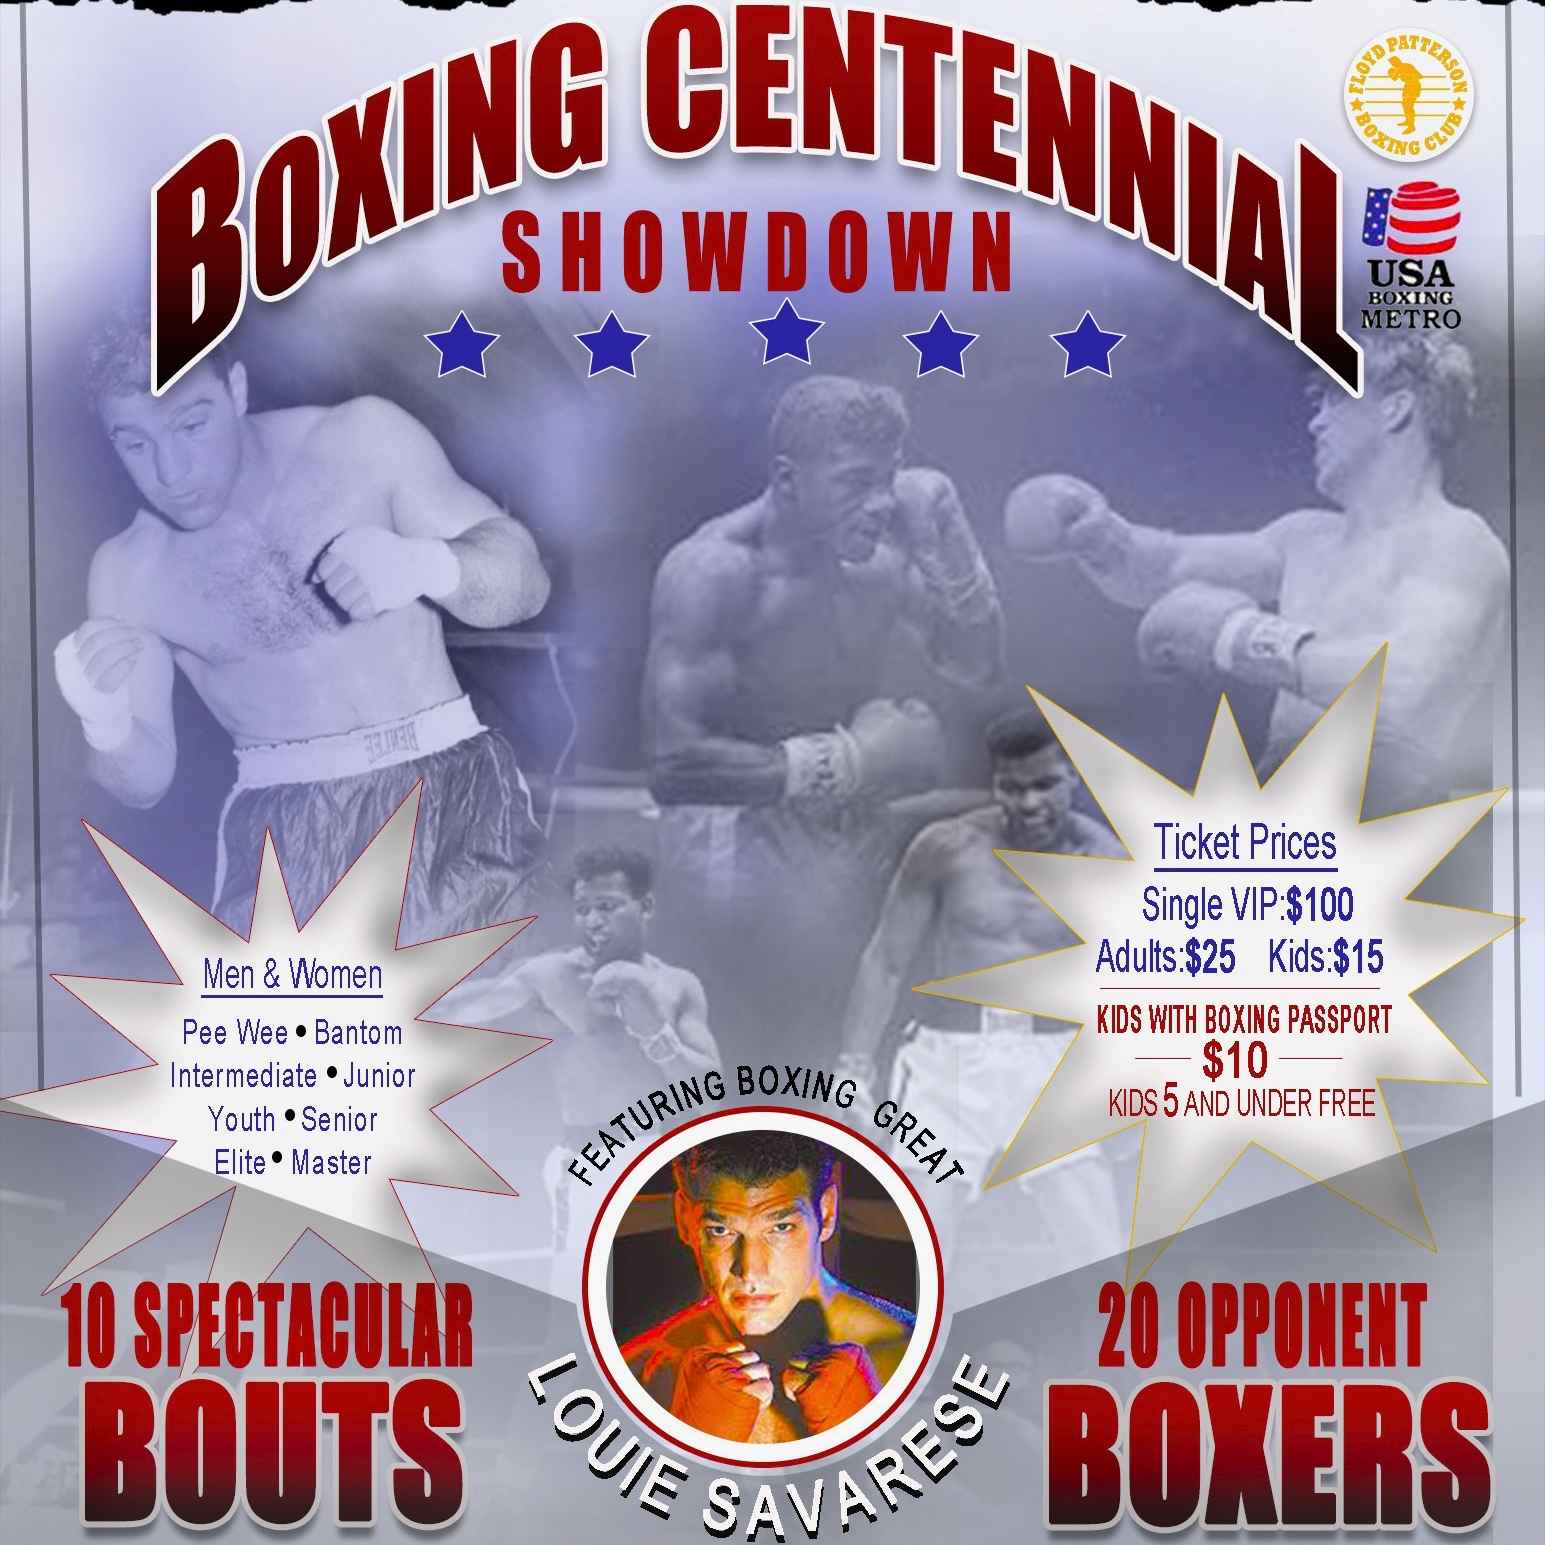 USA Boxing Metro Presents The Boxing Centennial Showdown